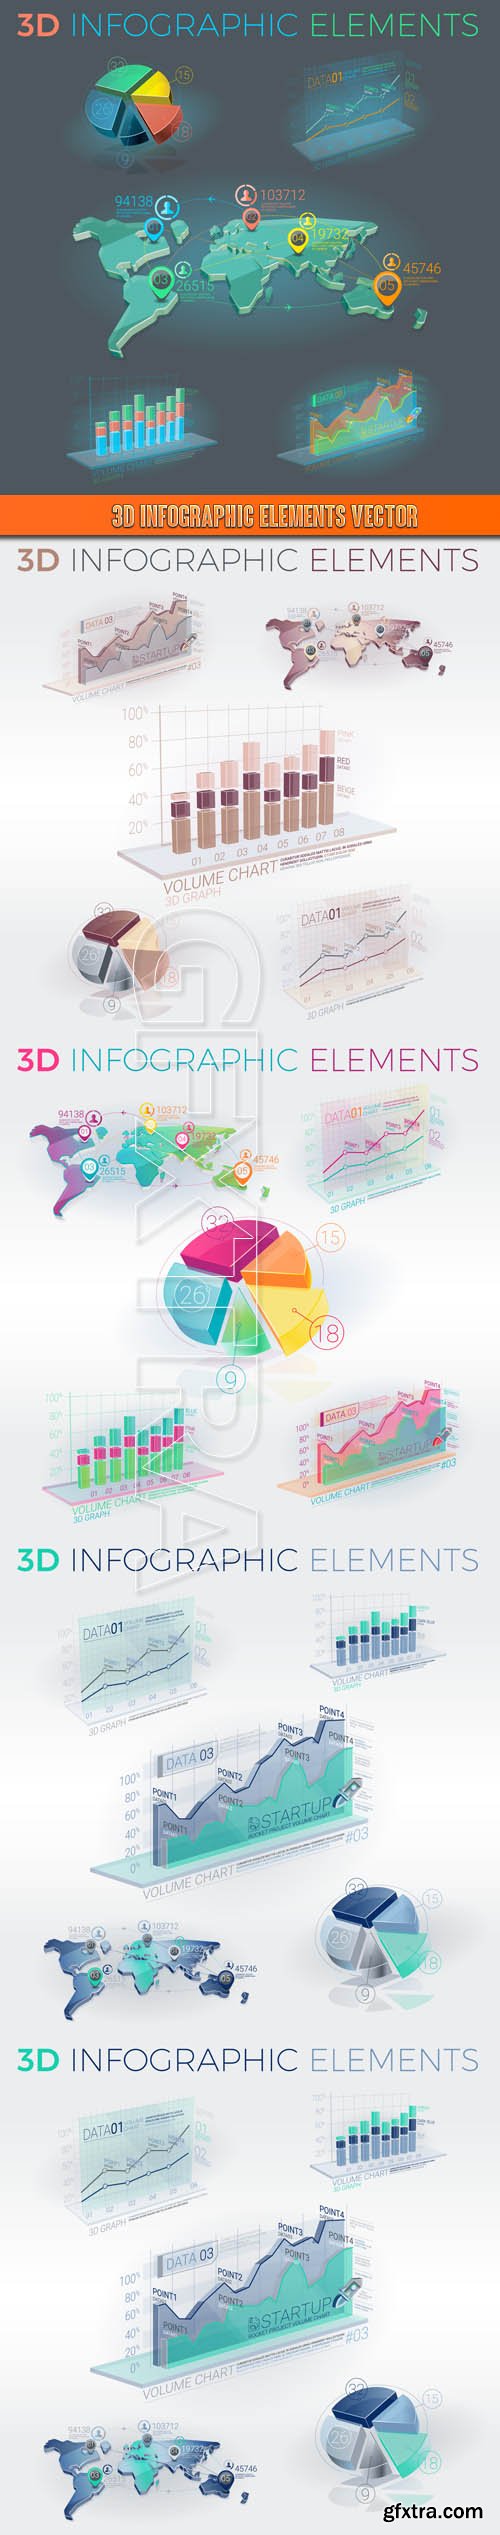 3D Infographic Elements vector